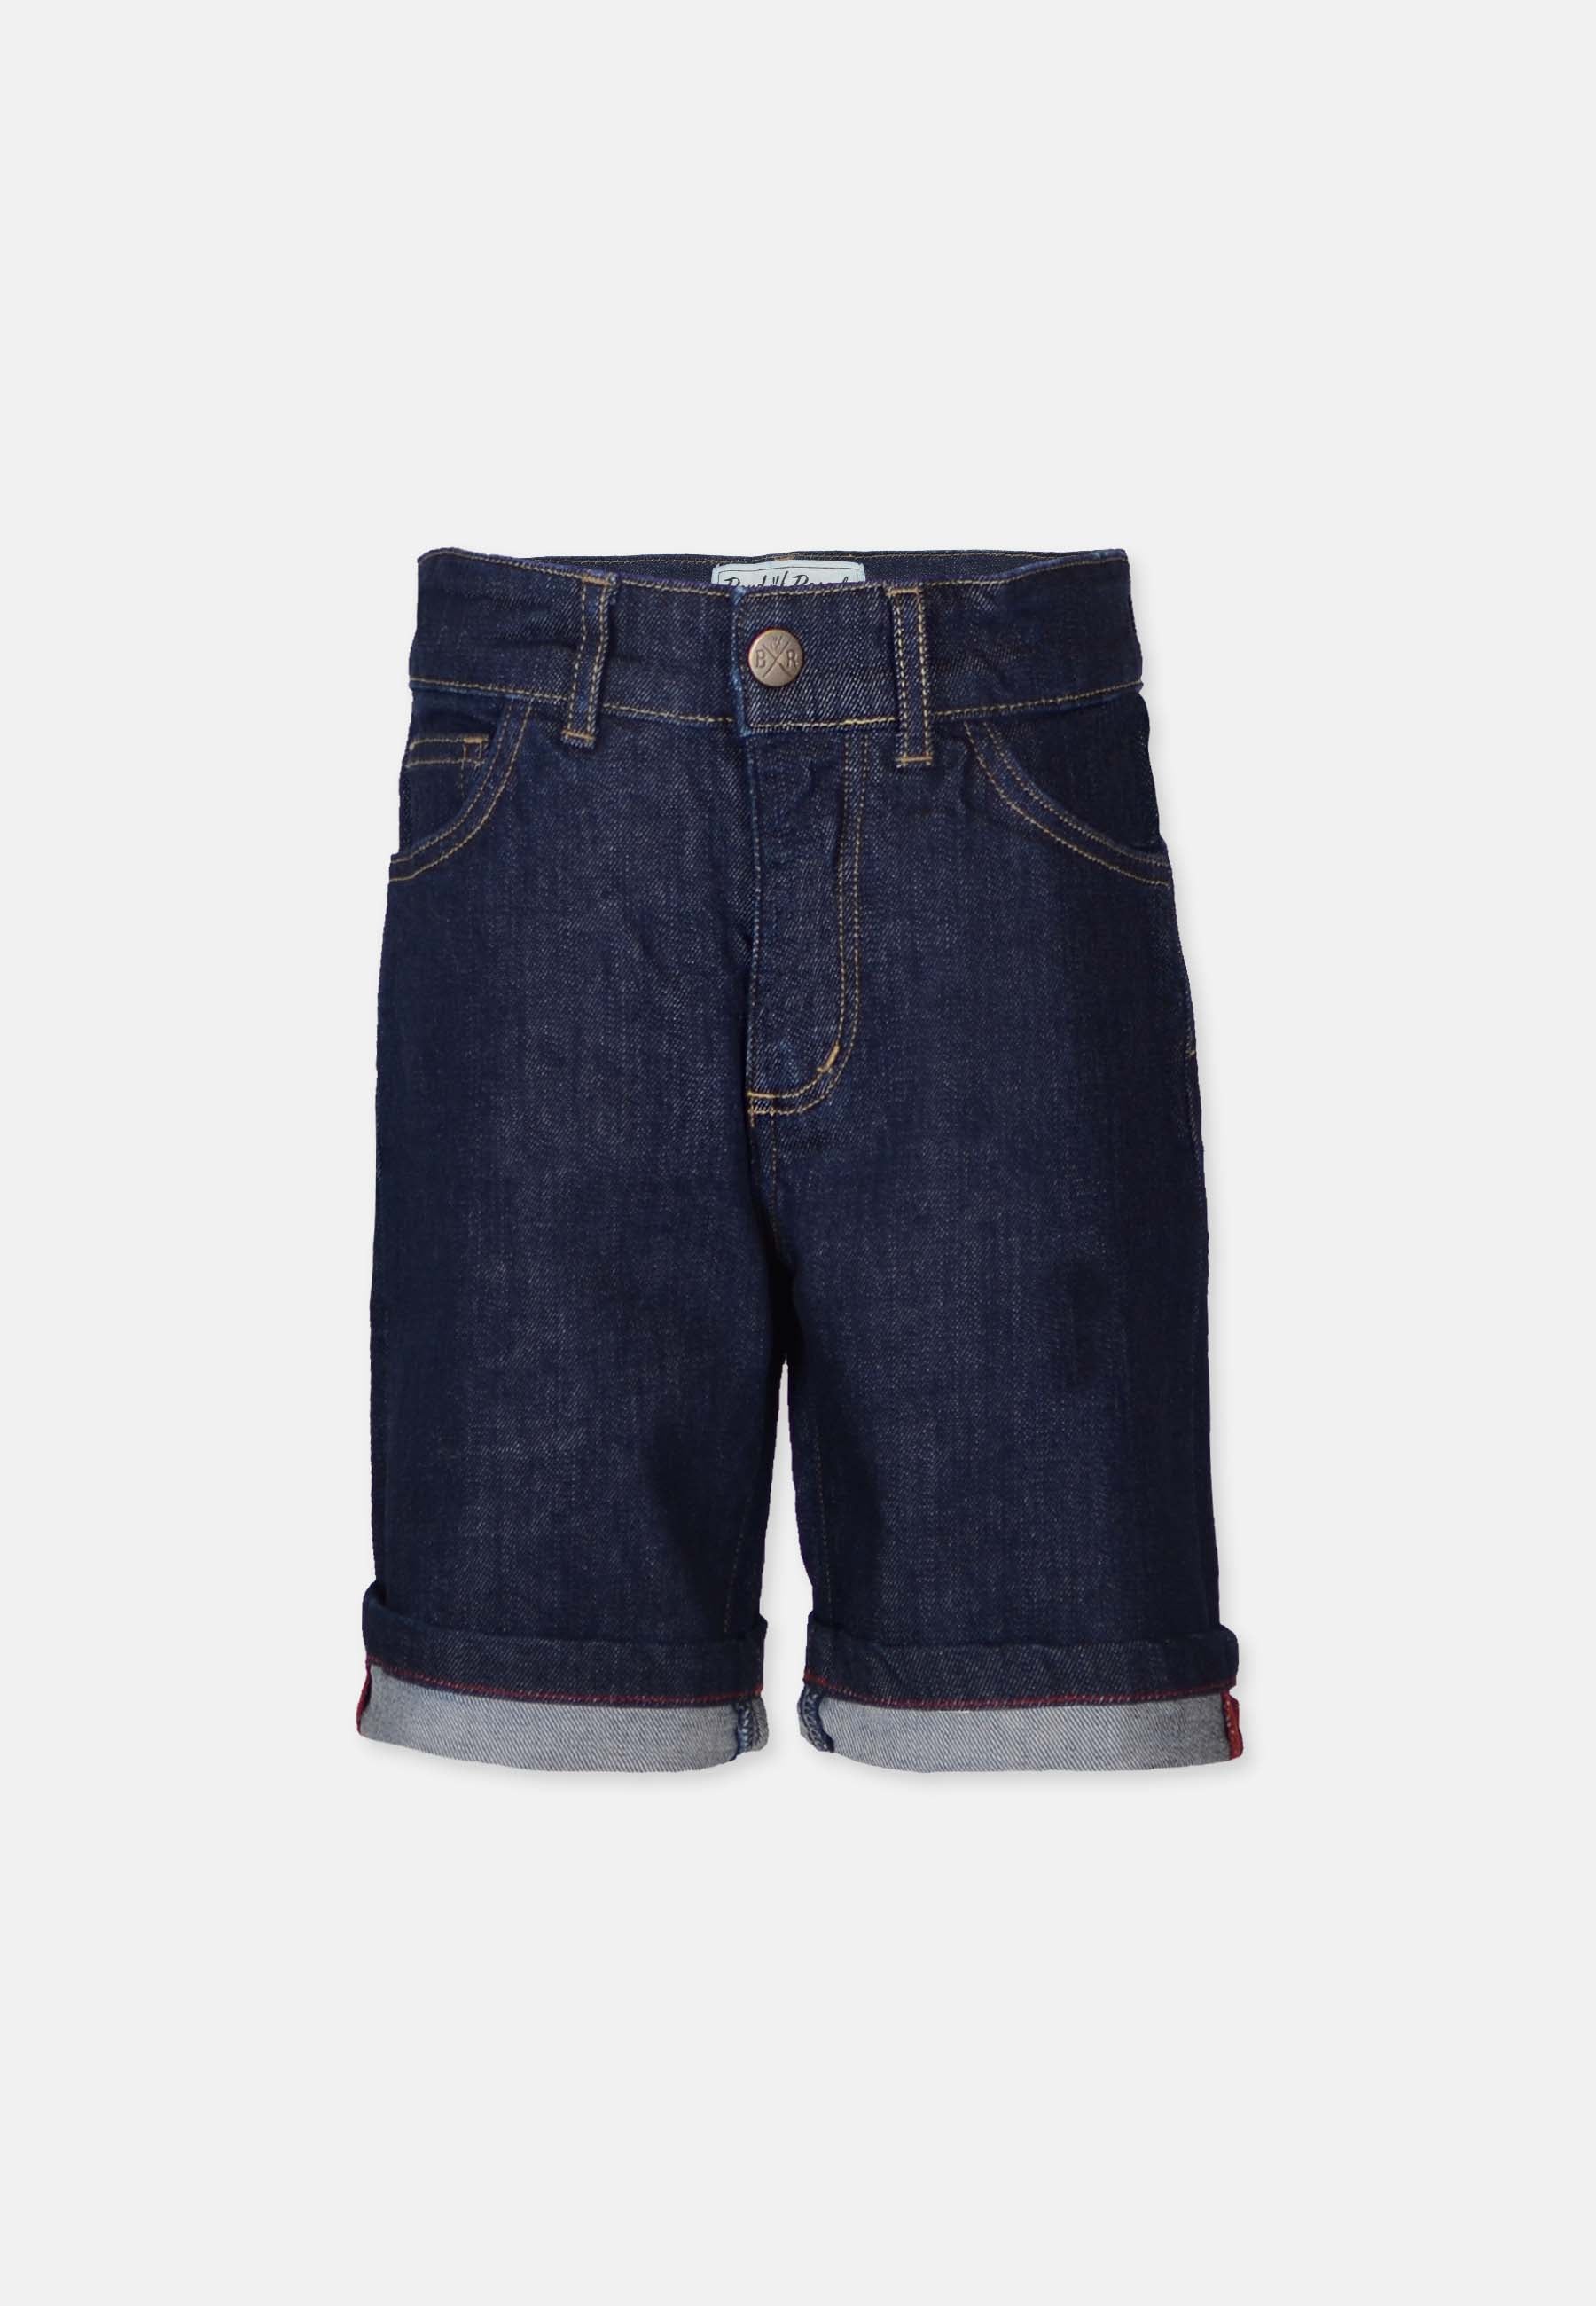 5 Pocket Jeans Shorts